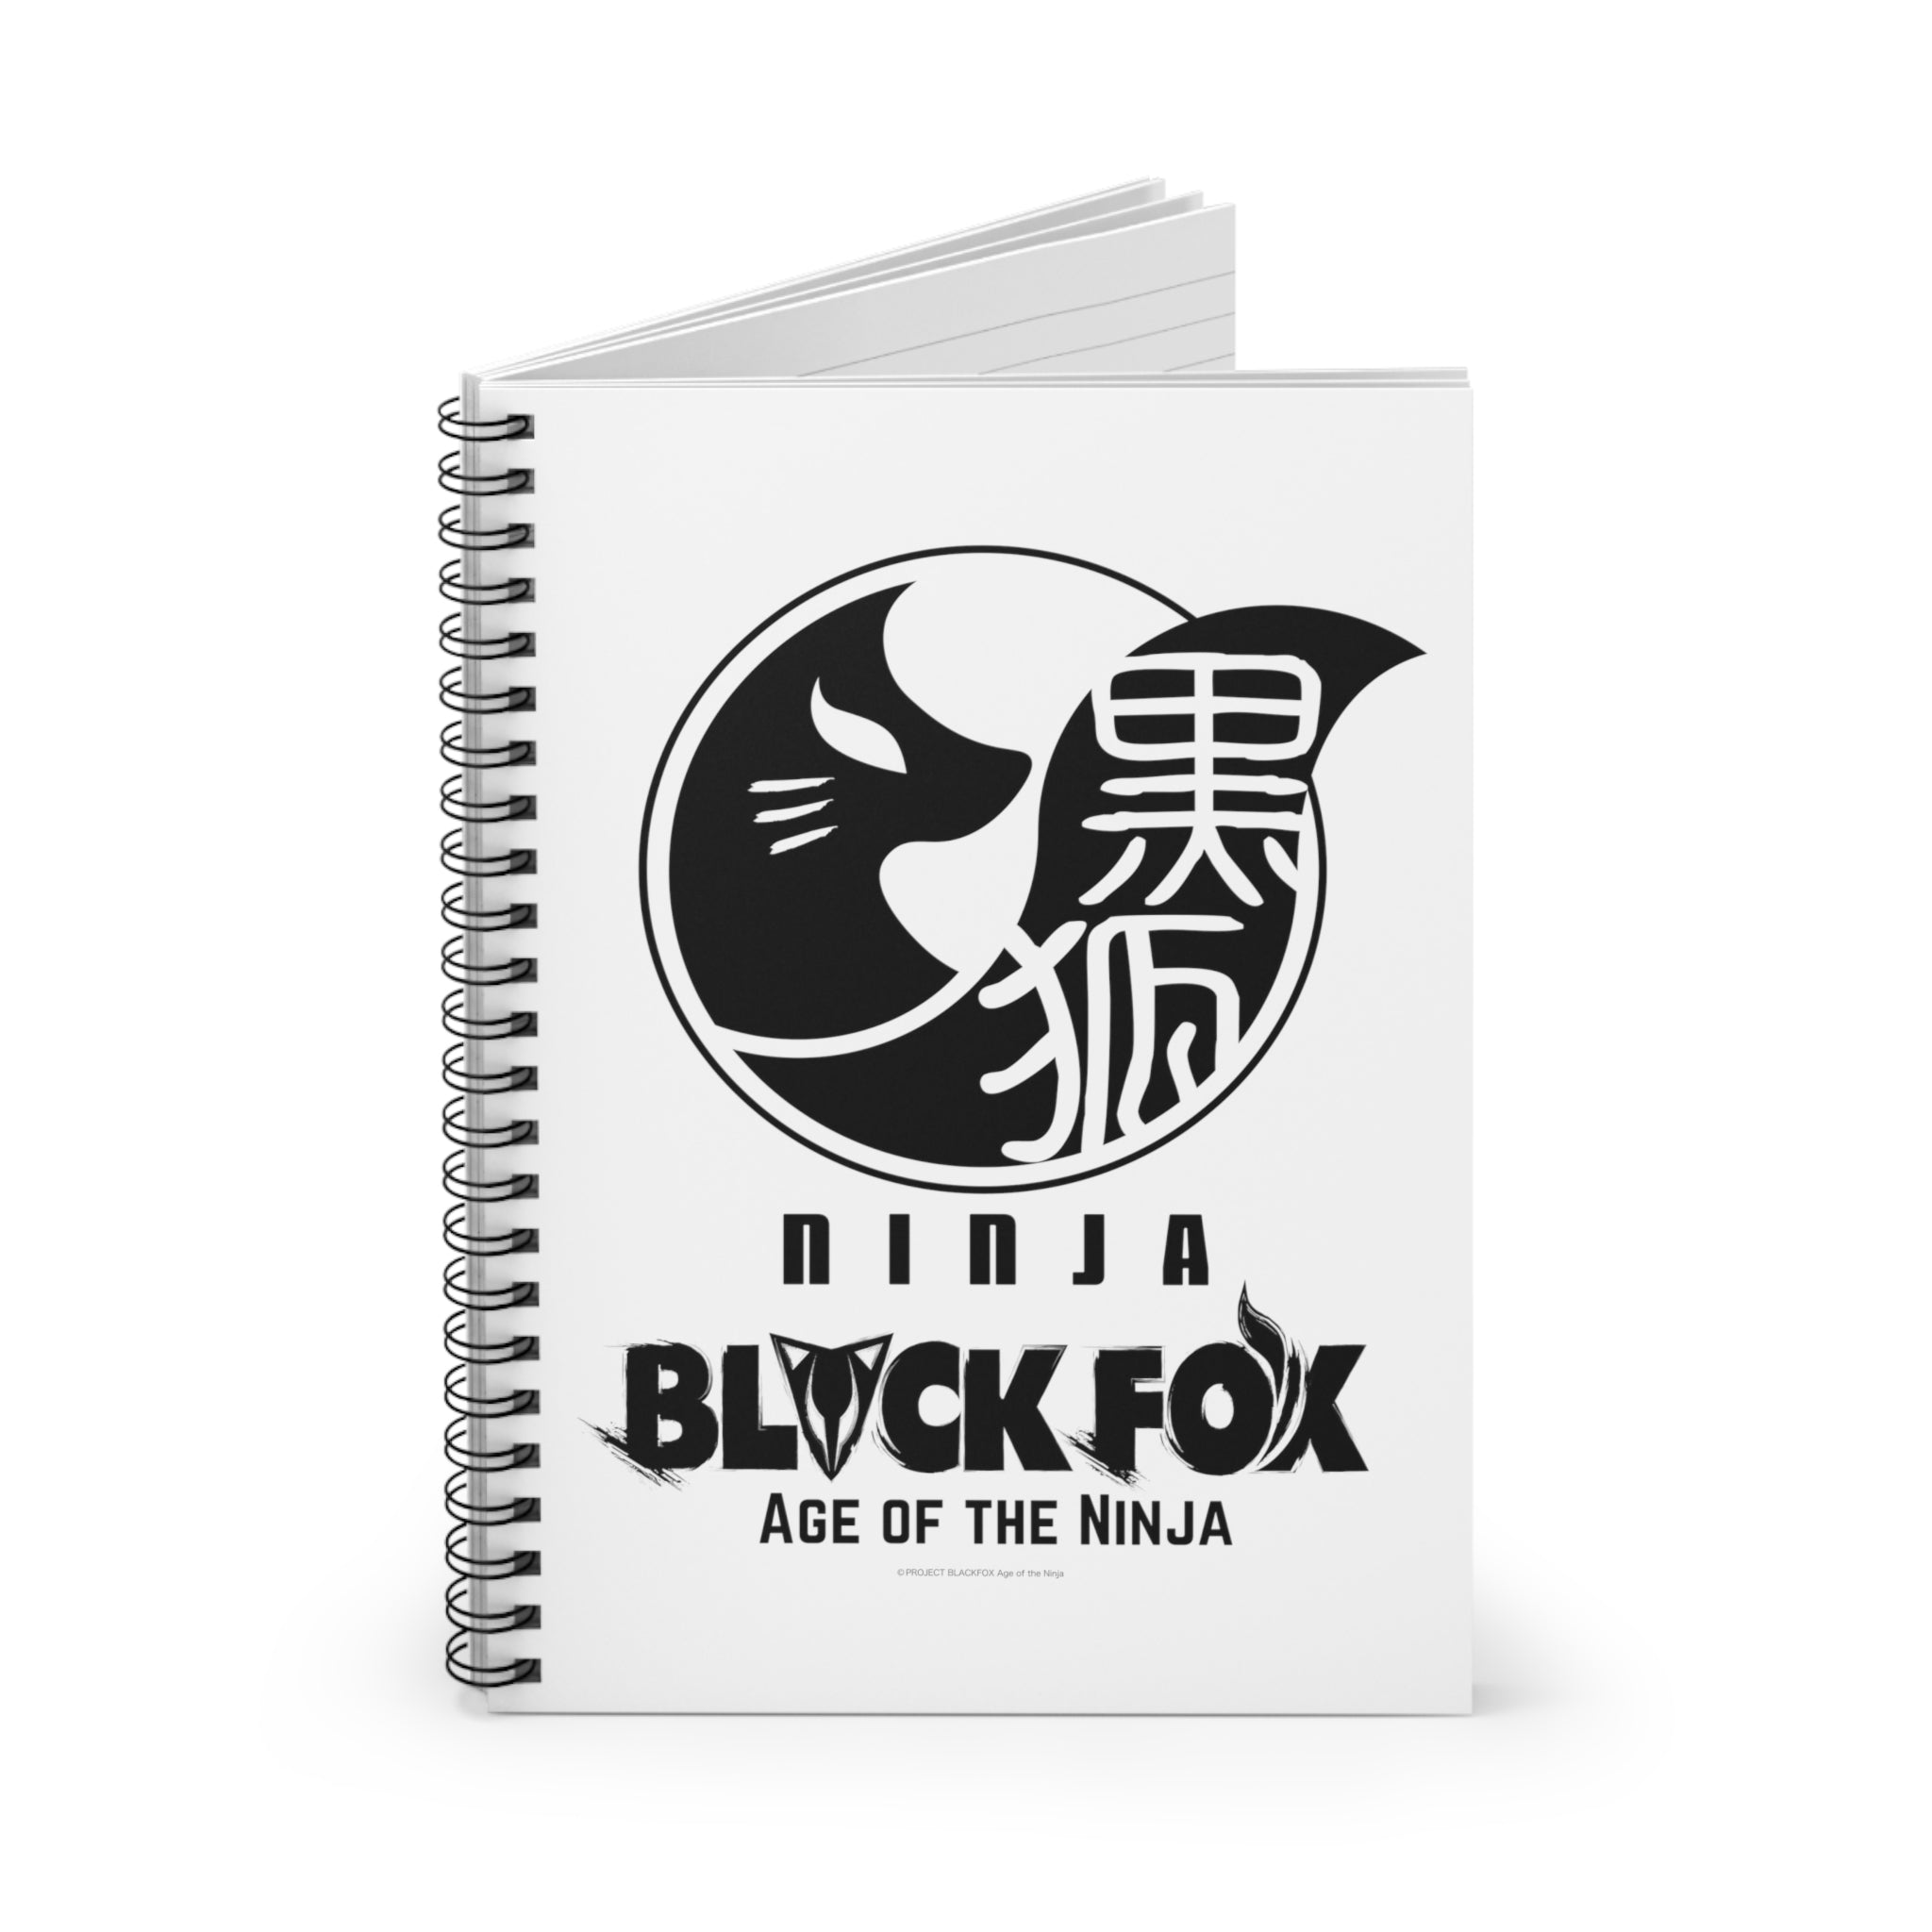 BLACKFOX INSIGNIA Spiral Notebook - Ruled Line (White)